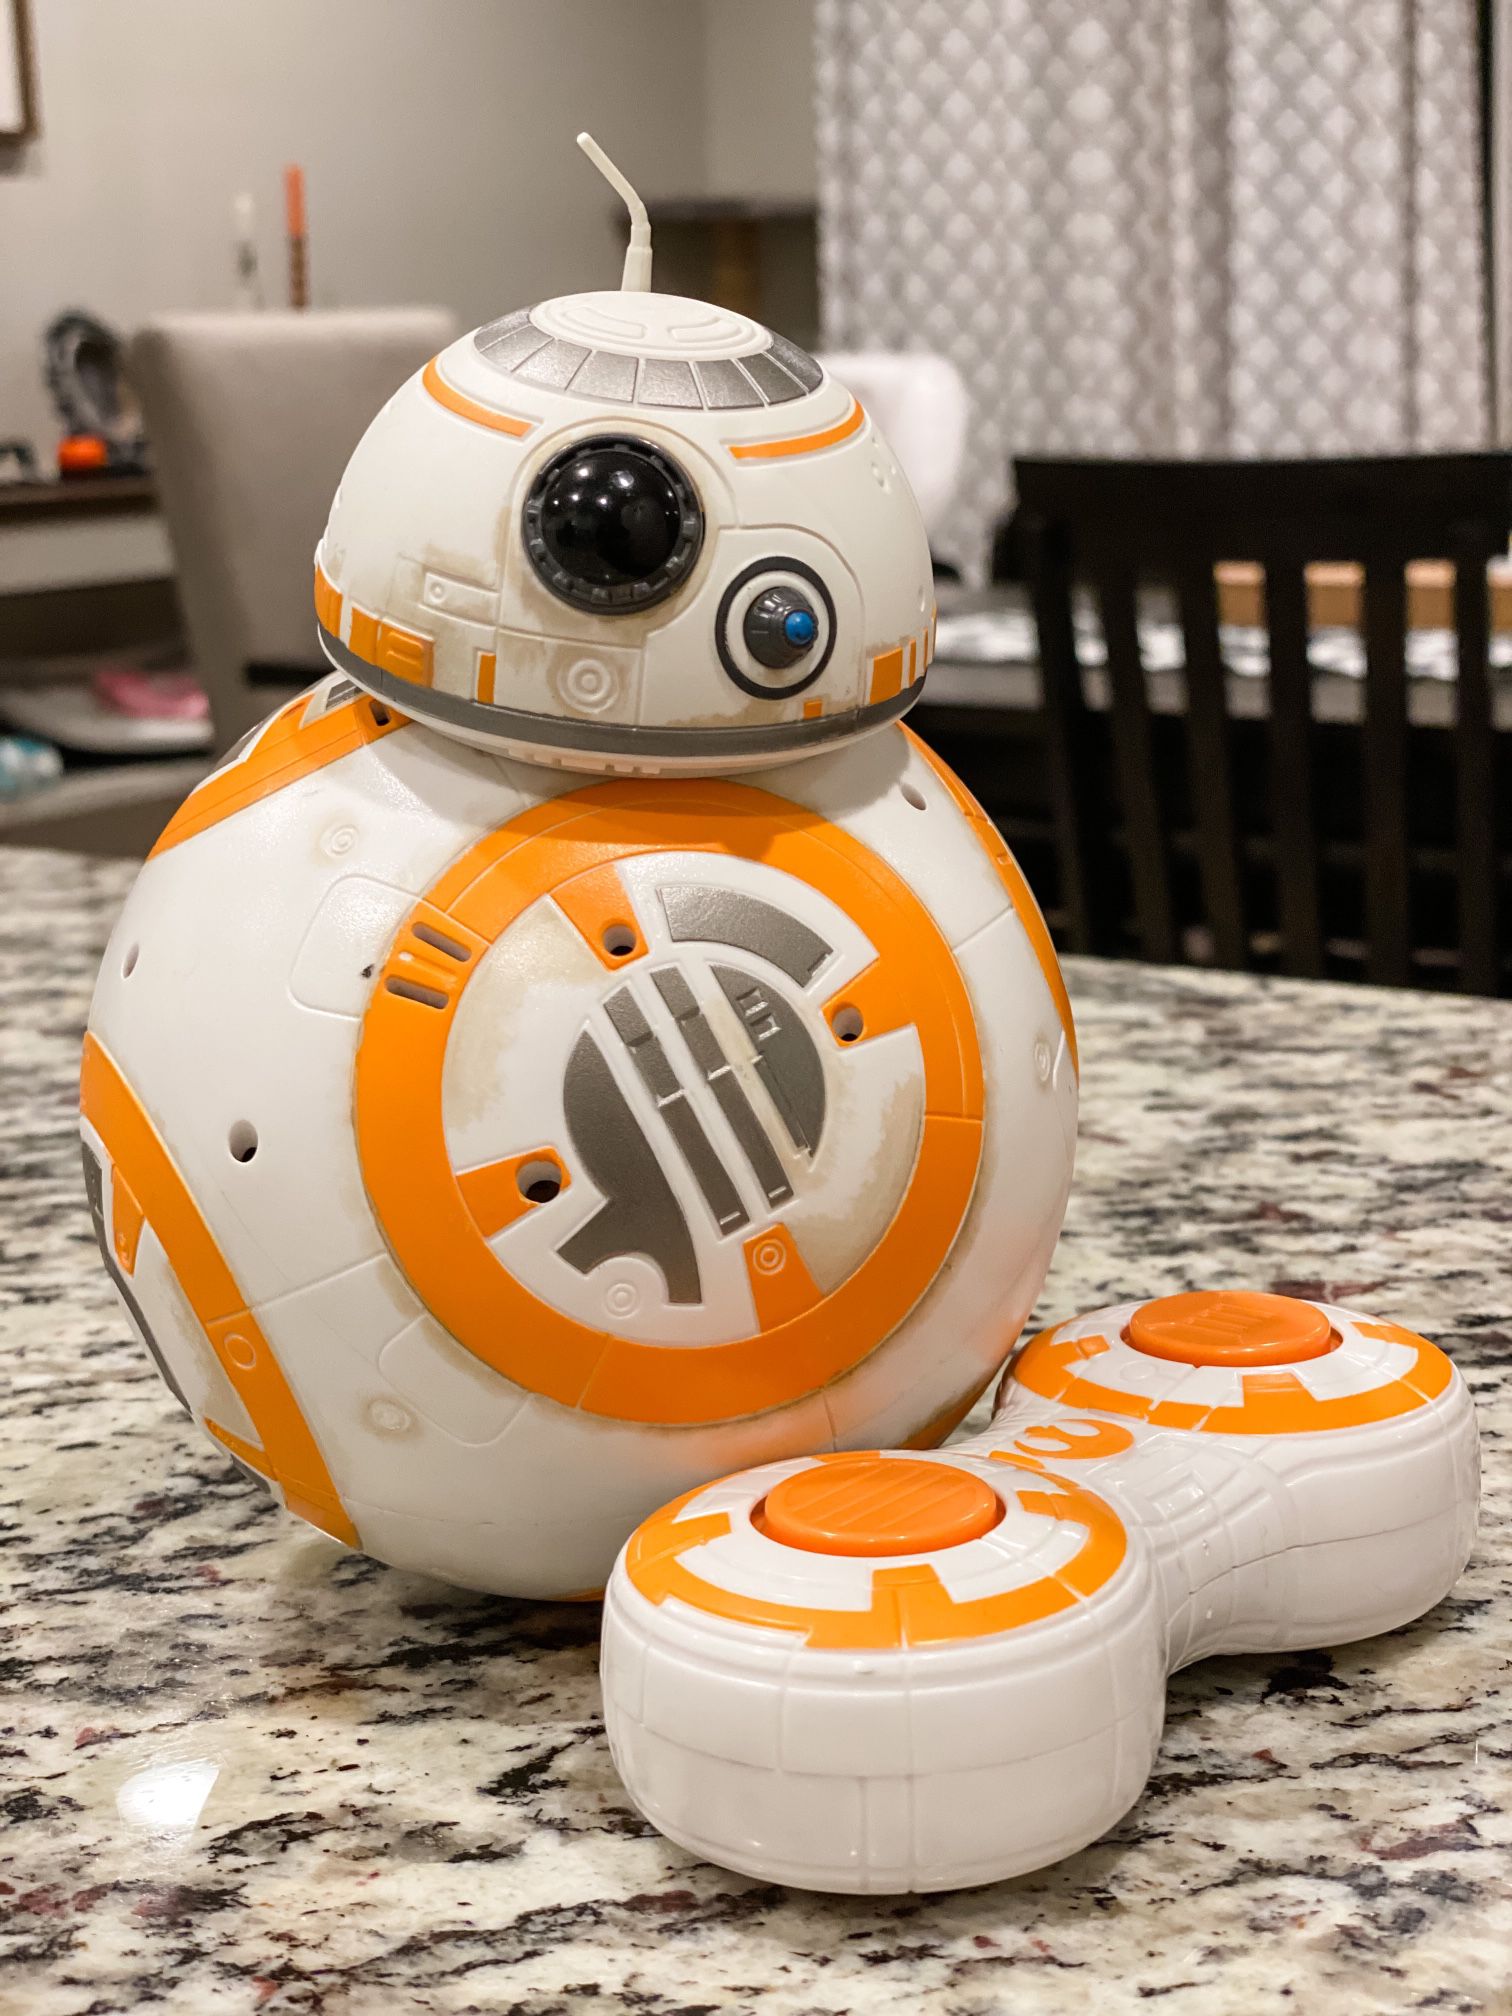 Star Wars BB-8 Remote Control RC Droid Toy